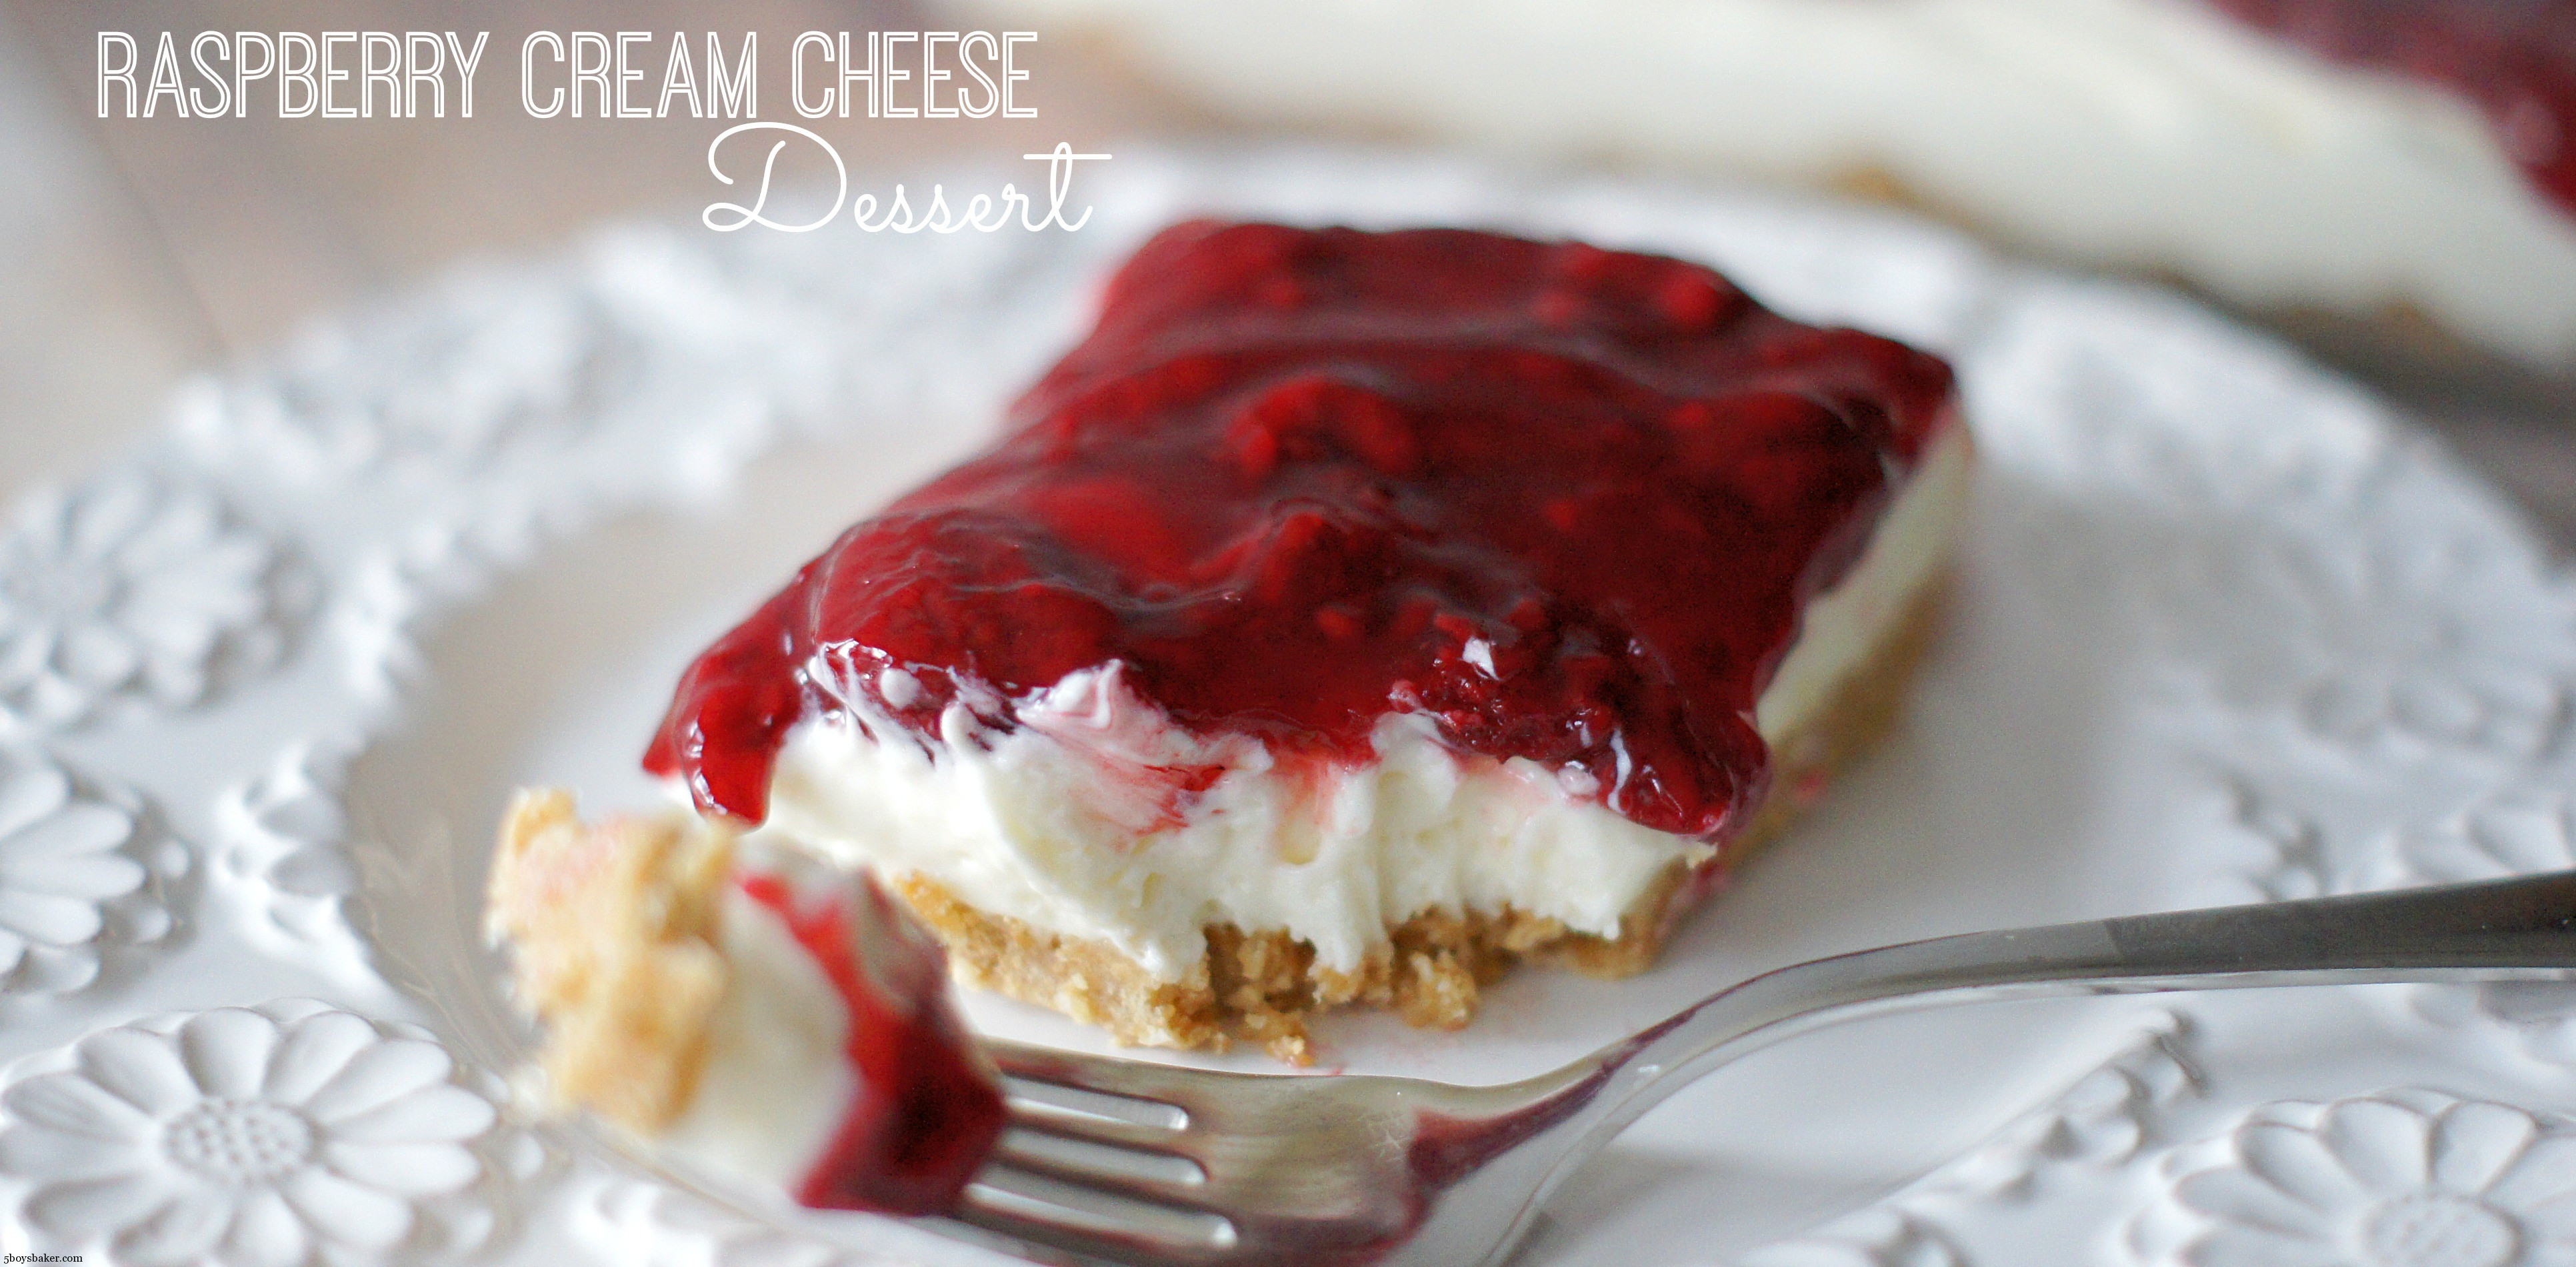 Desserts To Make With Cream Cheese
 Raspberry Cream Cheese Dessert